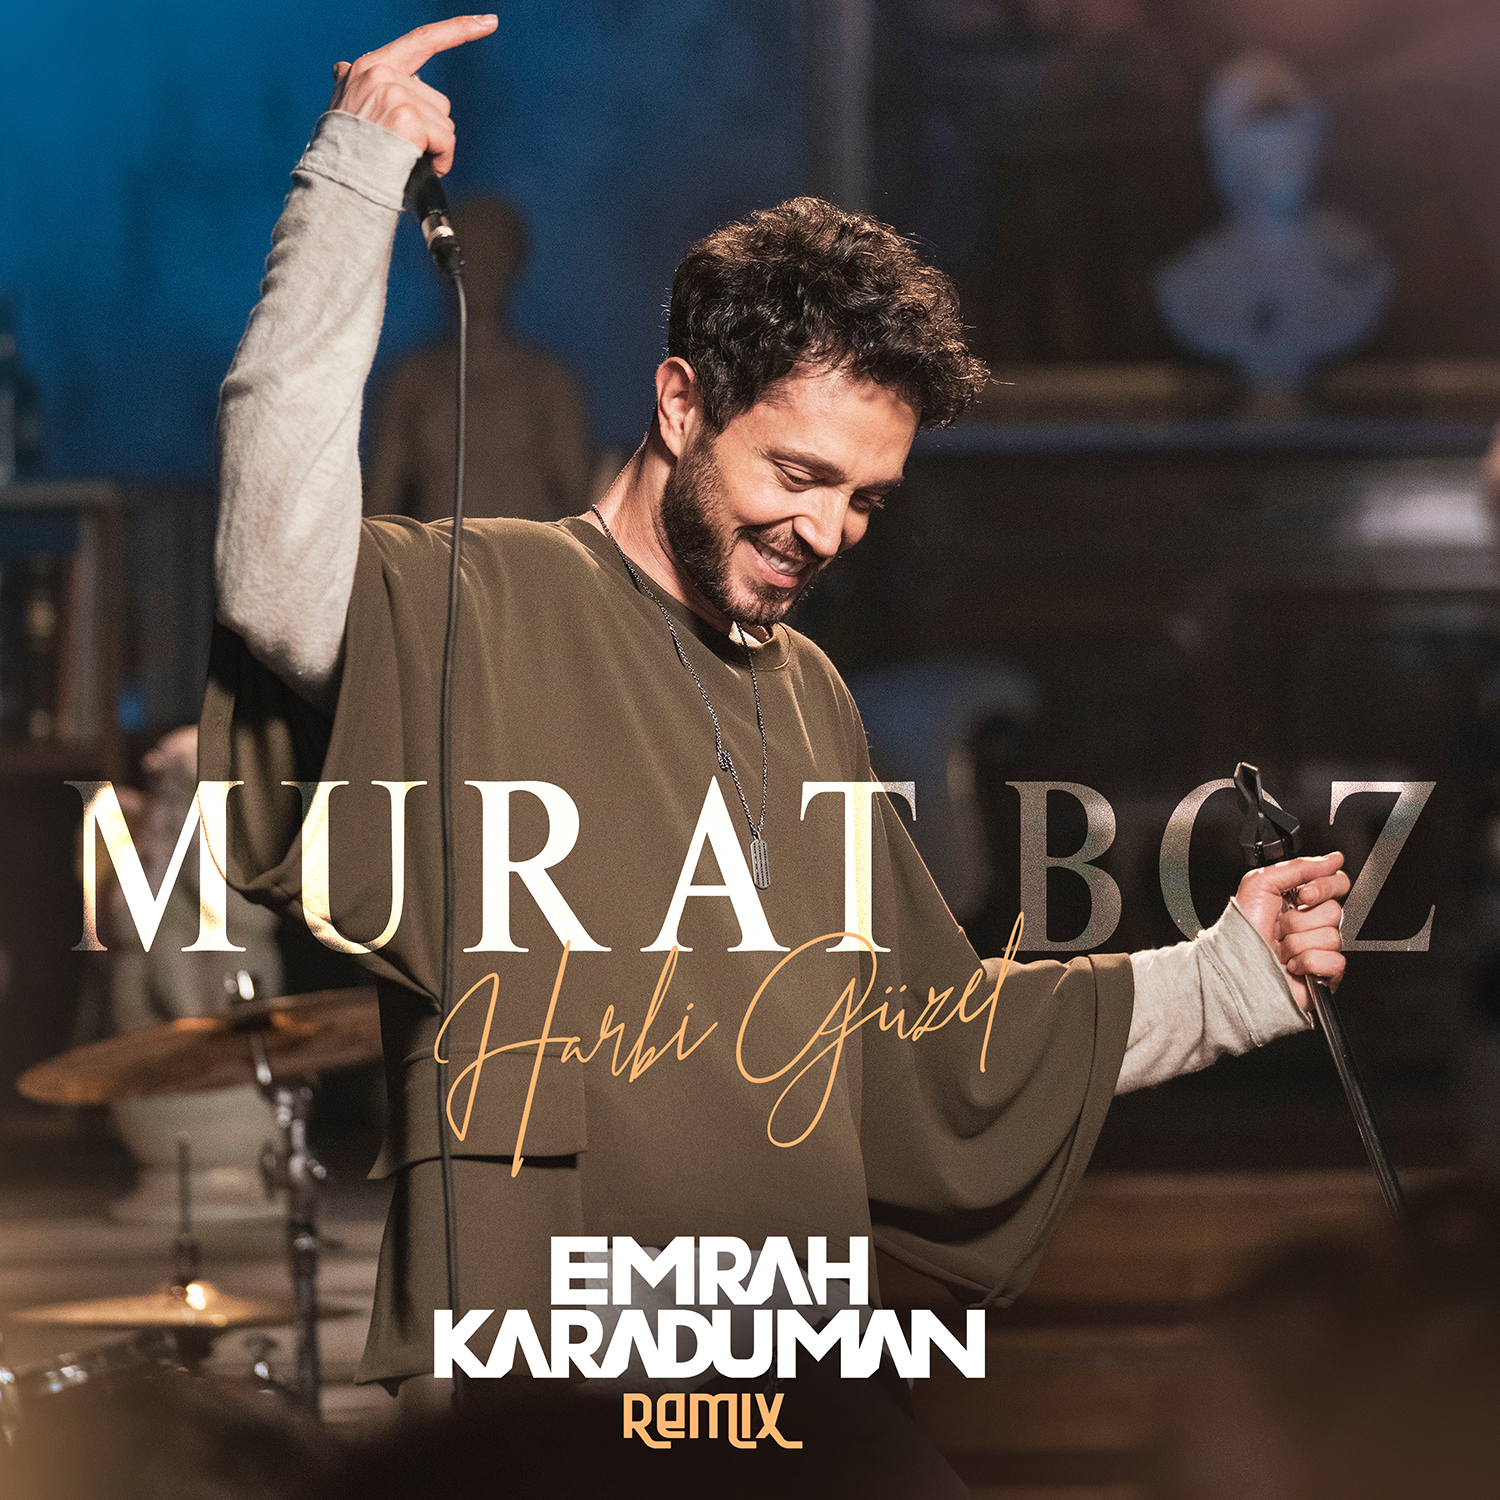 Murat Boz Harbi Güzel Emrah Karaduman Remix